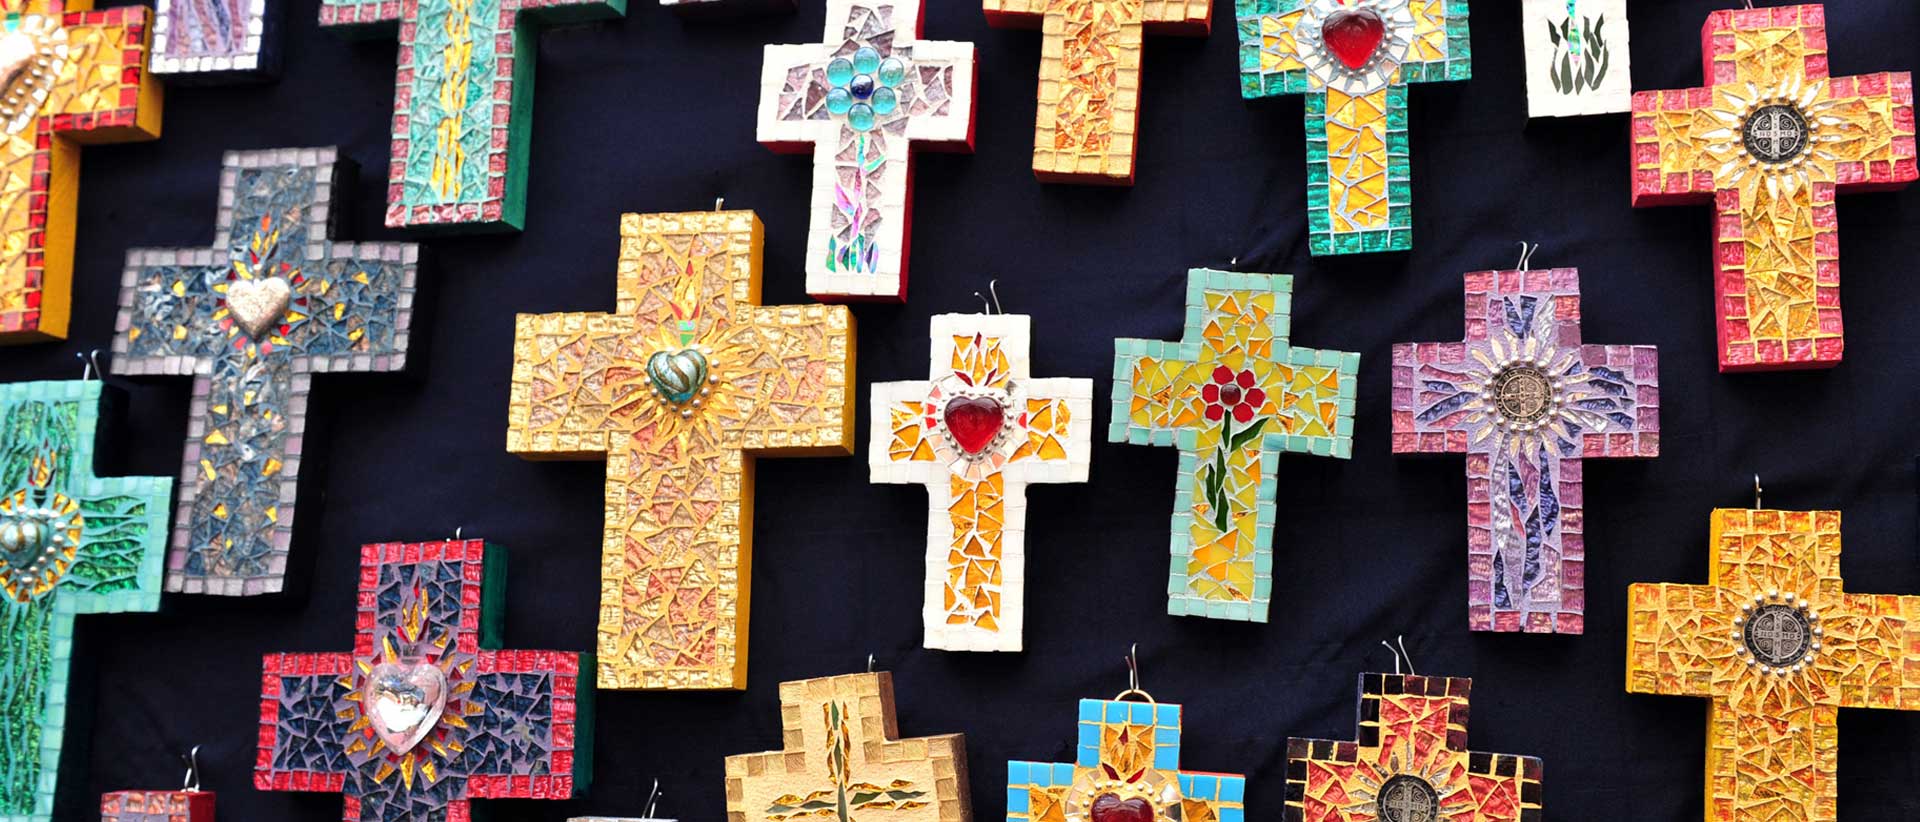 Several mosaic crosses